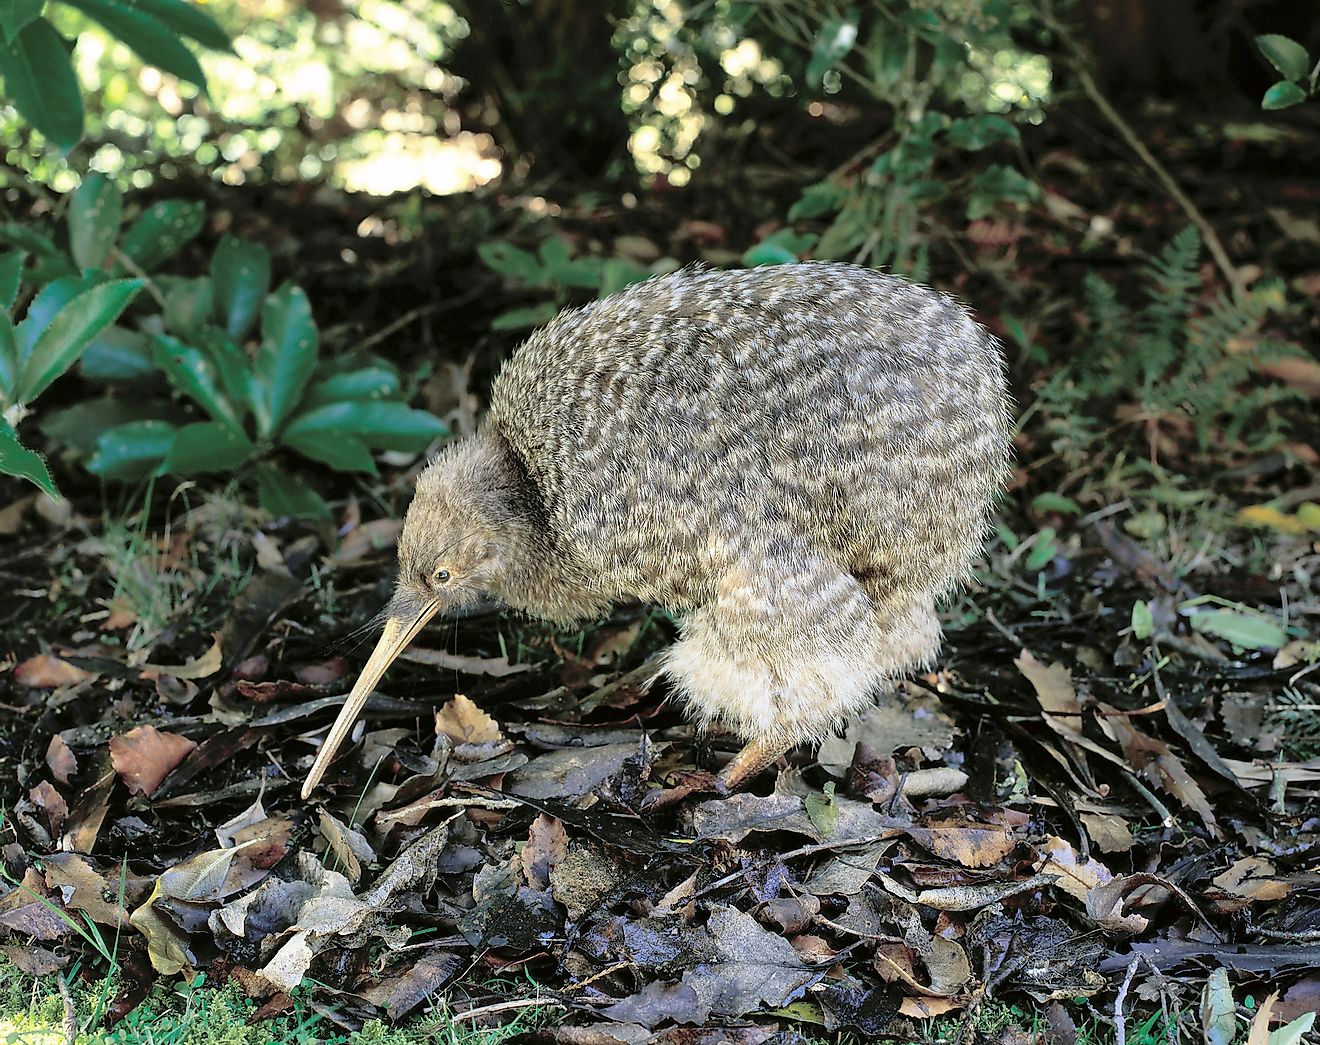 A little spotted kiwi. Image credit: John Carnemolla/Shutterstock.com